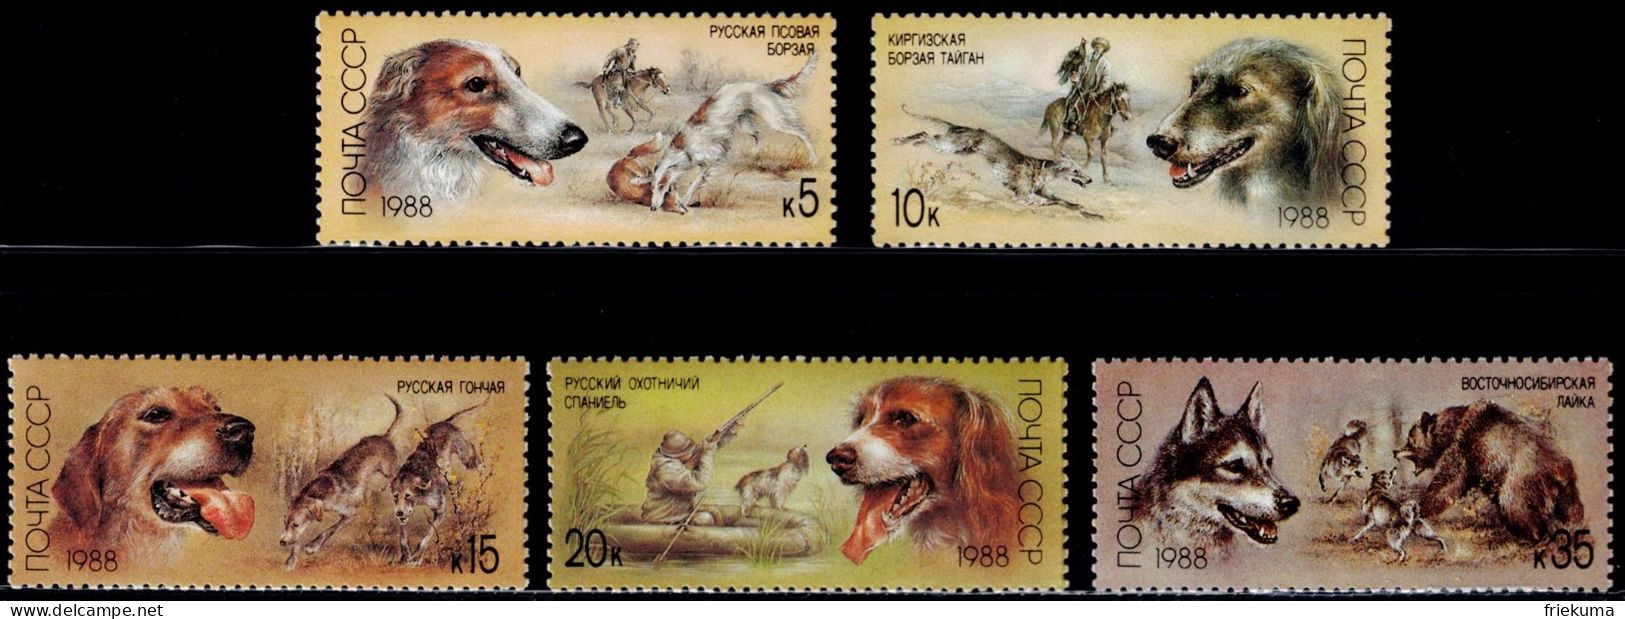 CCCP 1988, Dogs: Barsoi, Taigan, Russian Hunting Dog, Russian Spaniel, East Siberian Polar Dog (Laika), MiNr. 5827-5831 - Chiens